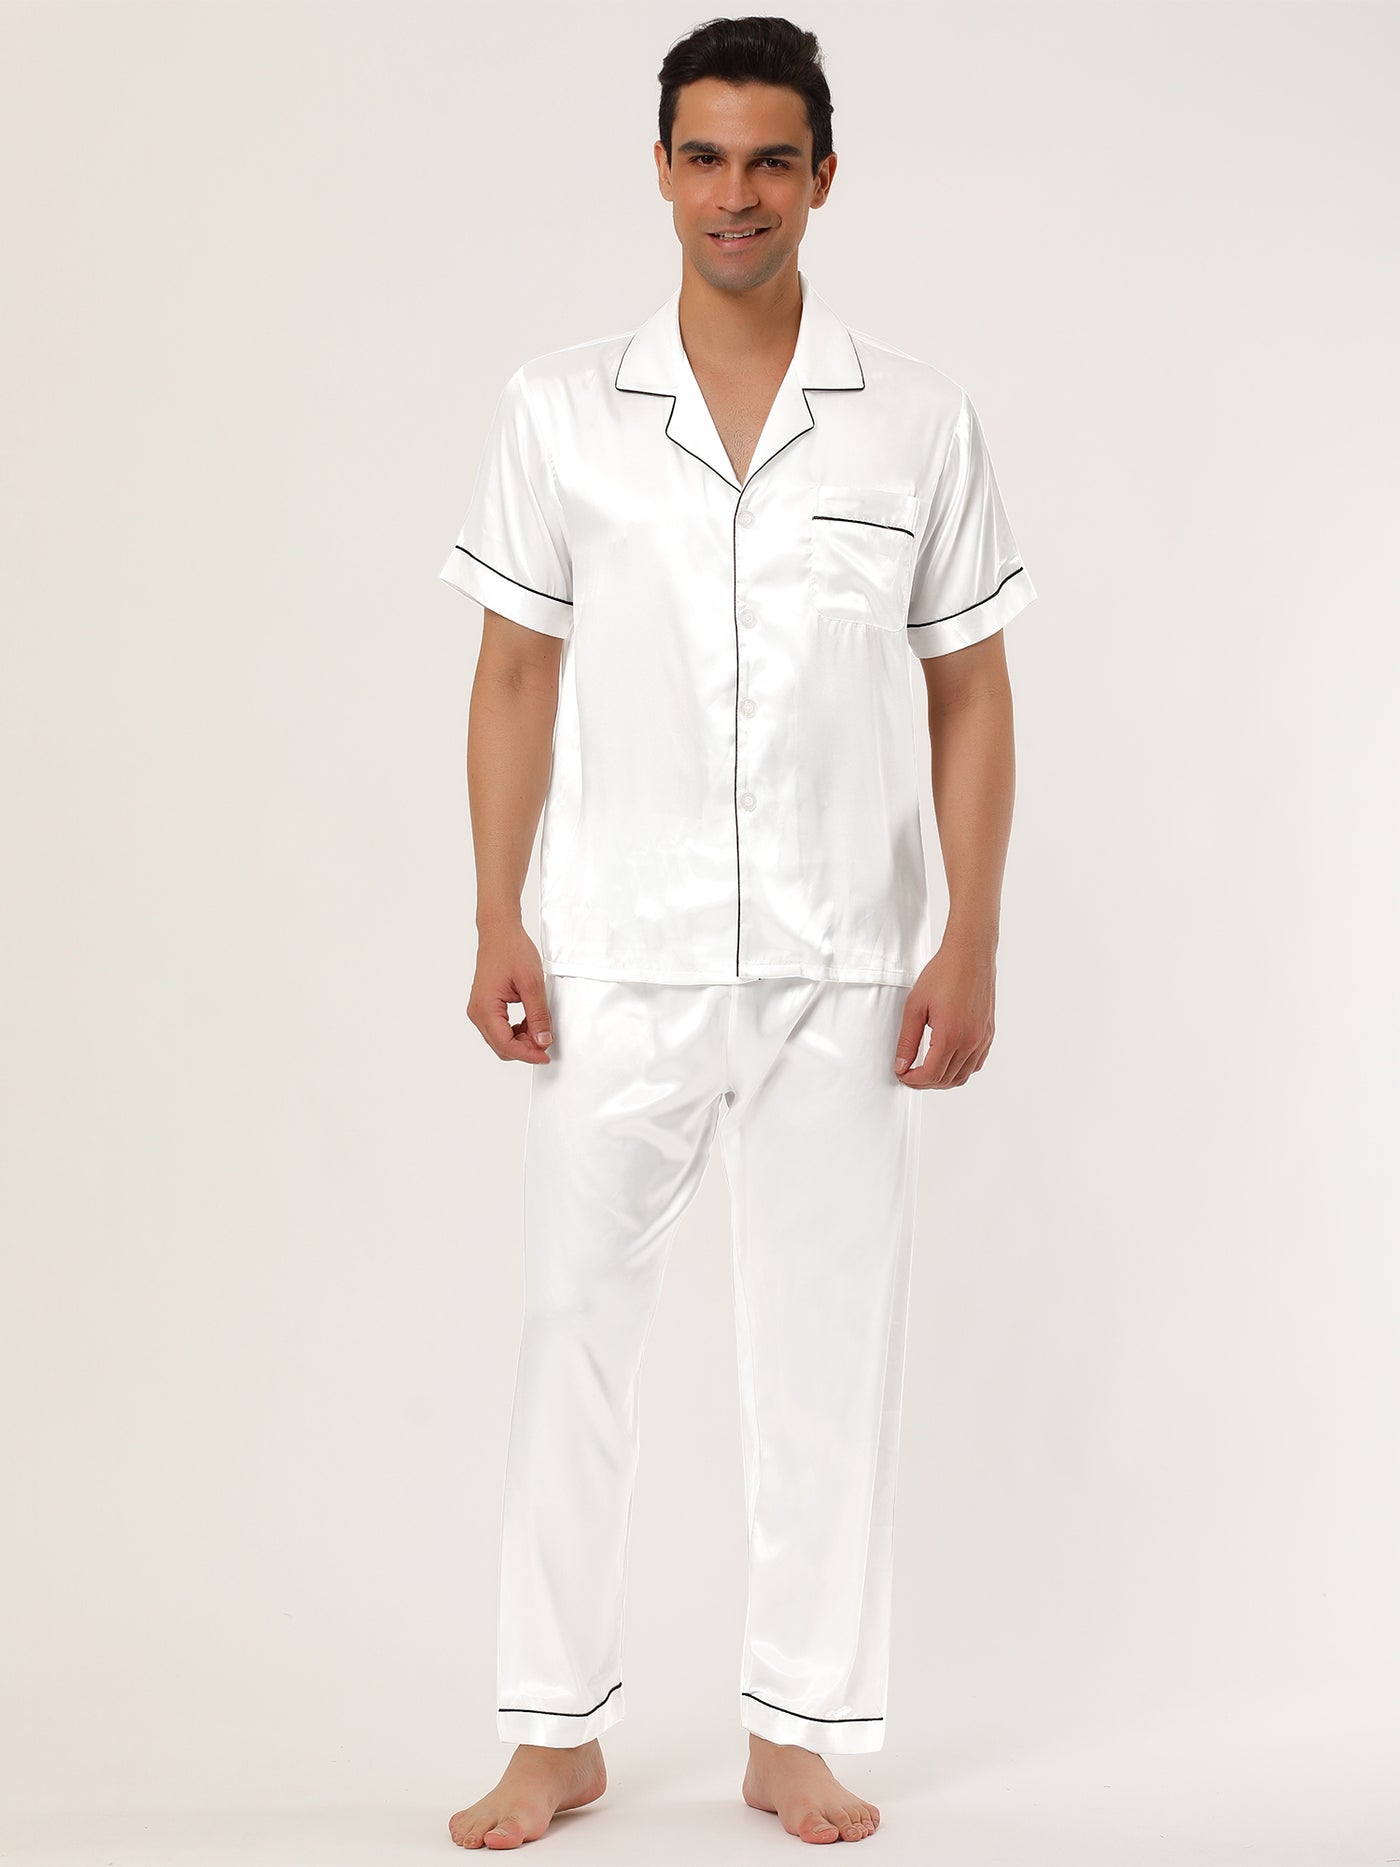 Bublédon Satin Short Sleeve Plain Pajamas Sleepwear Sets